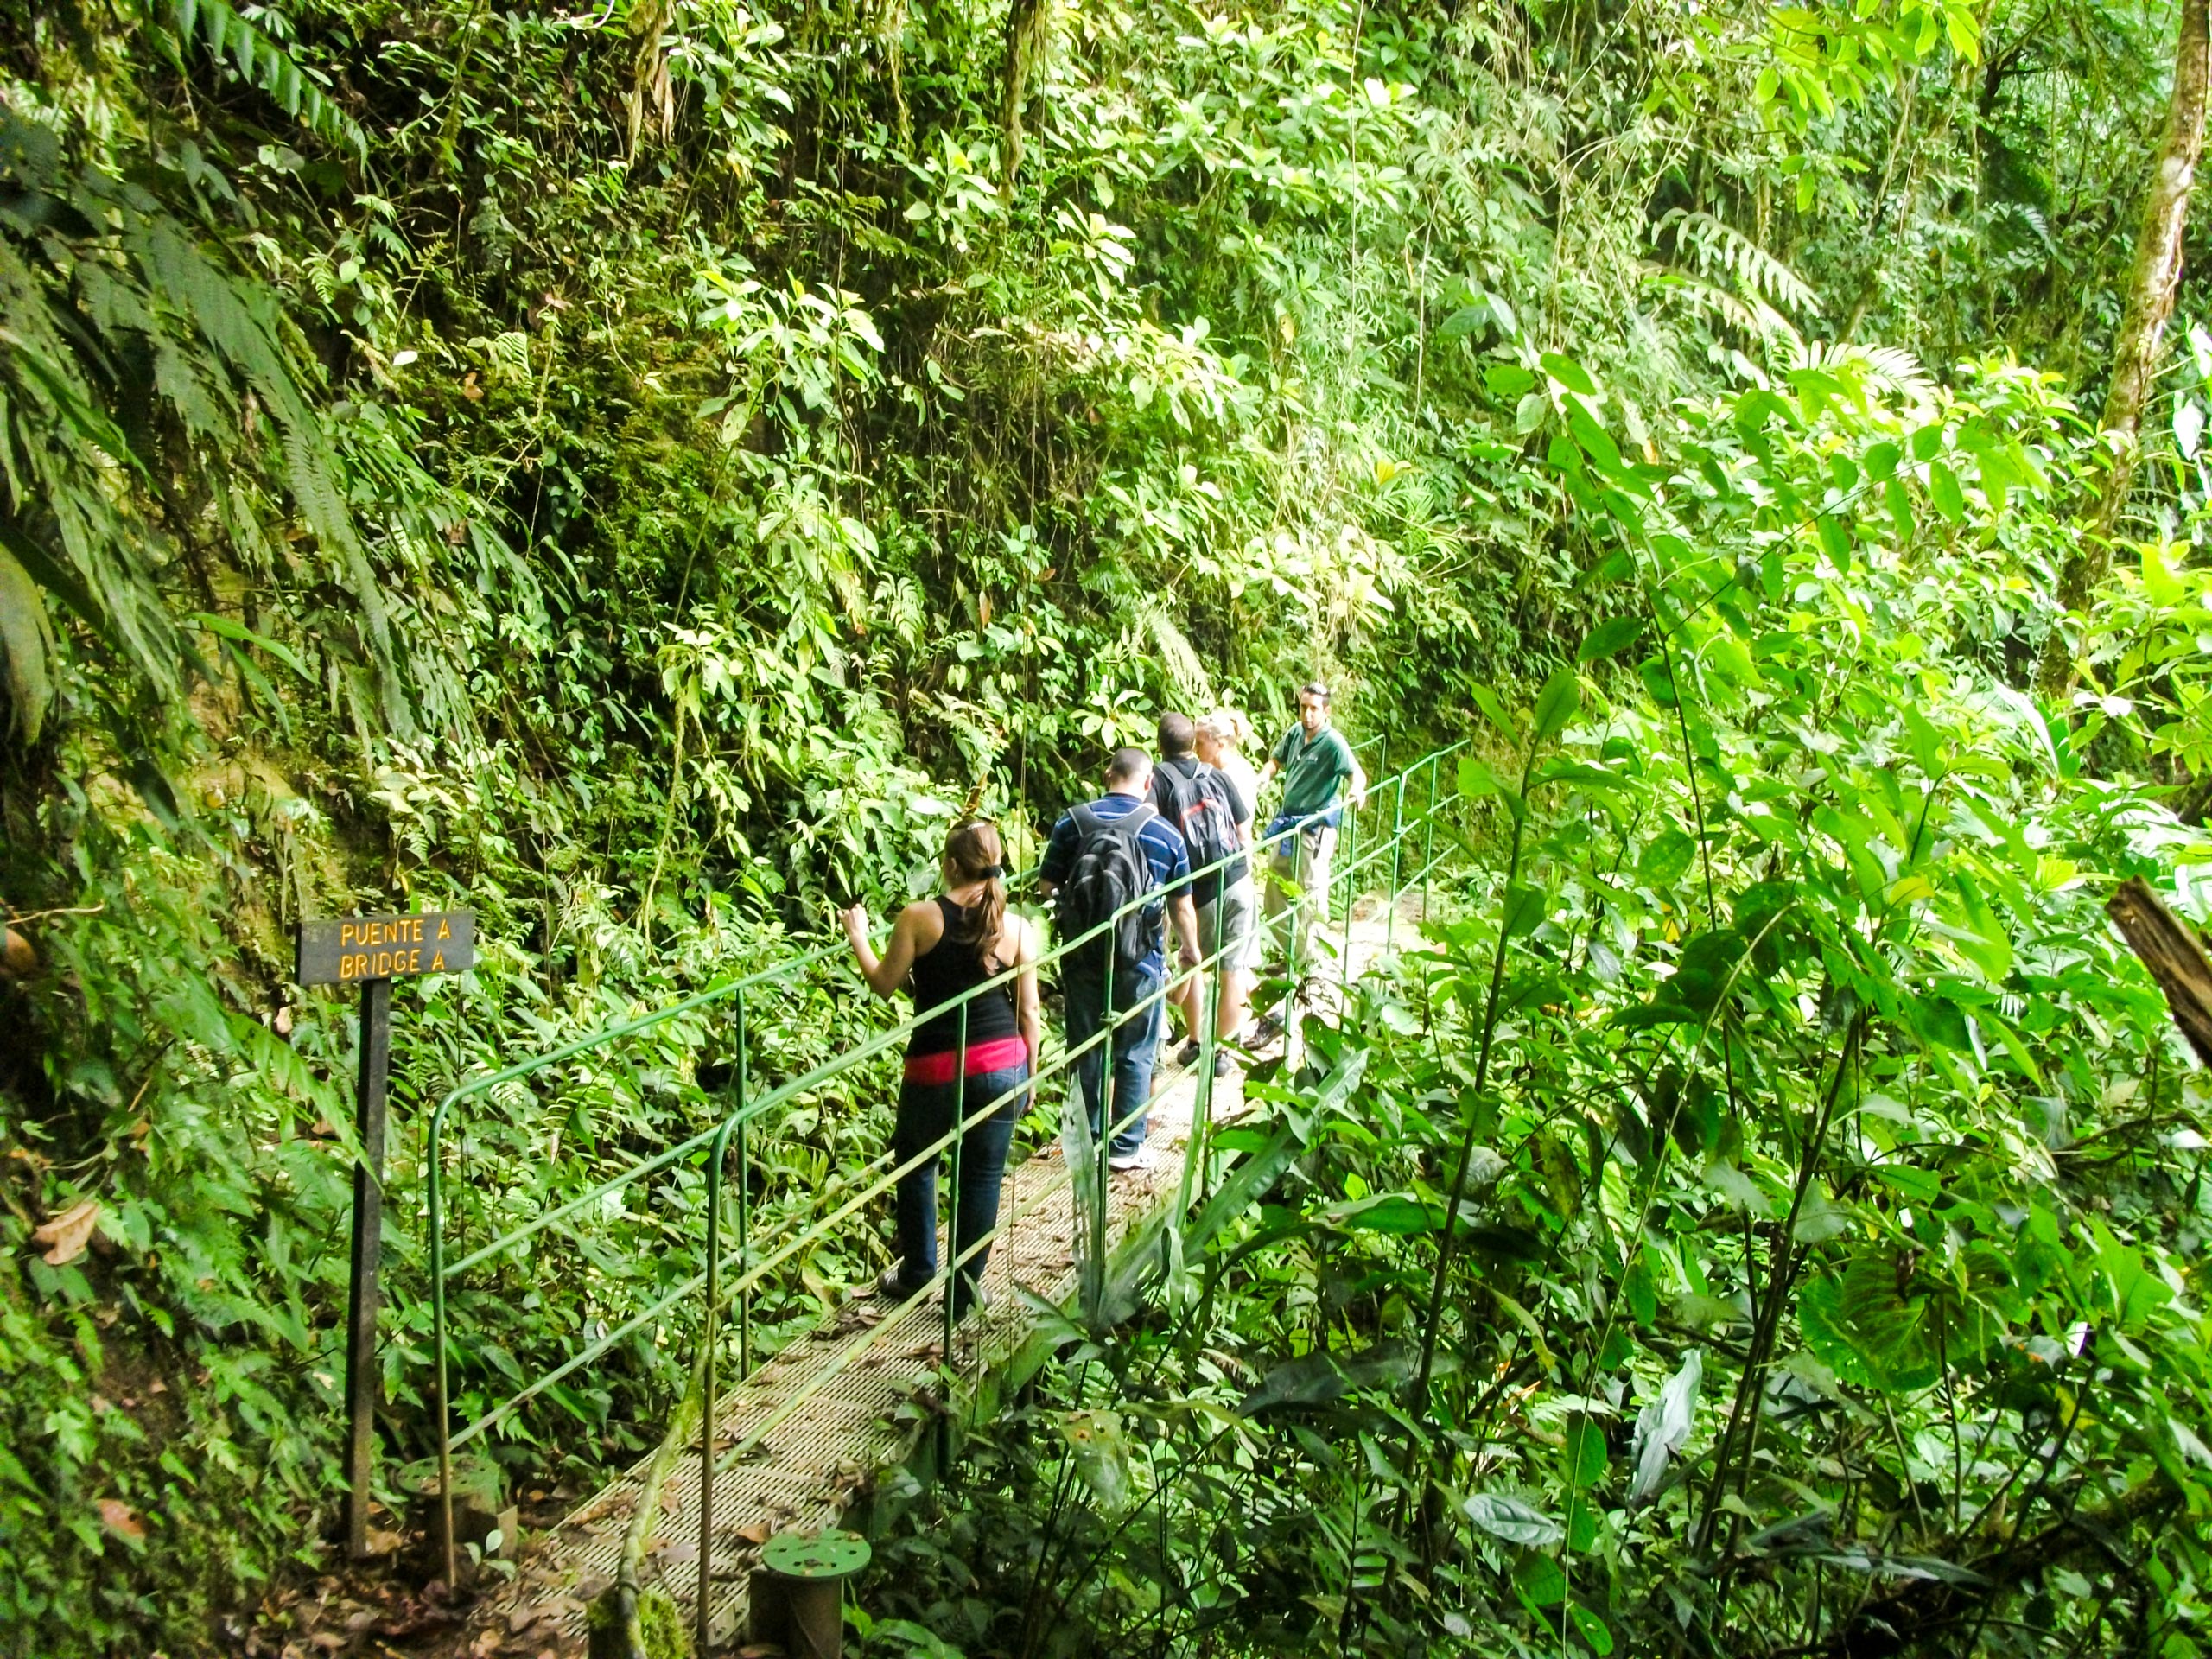 Raiforest journey in Costa Rica